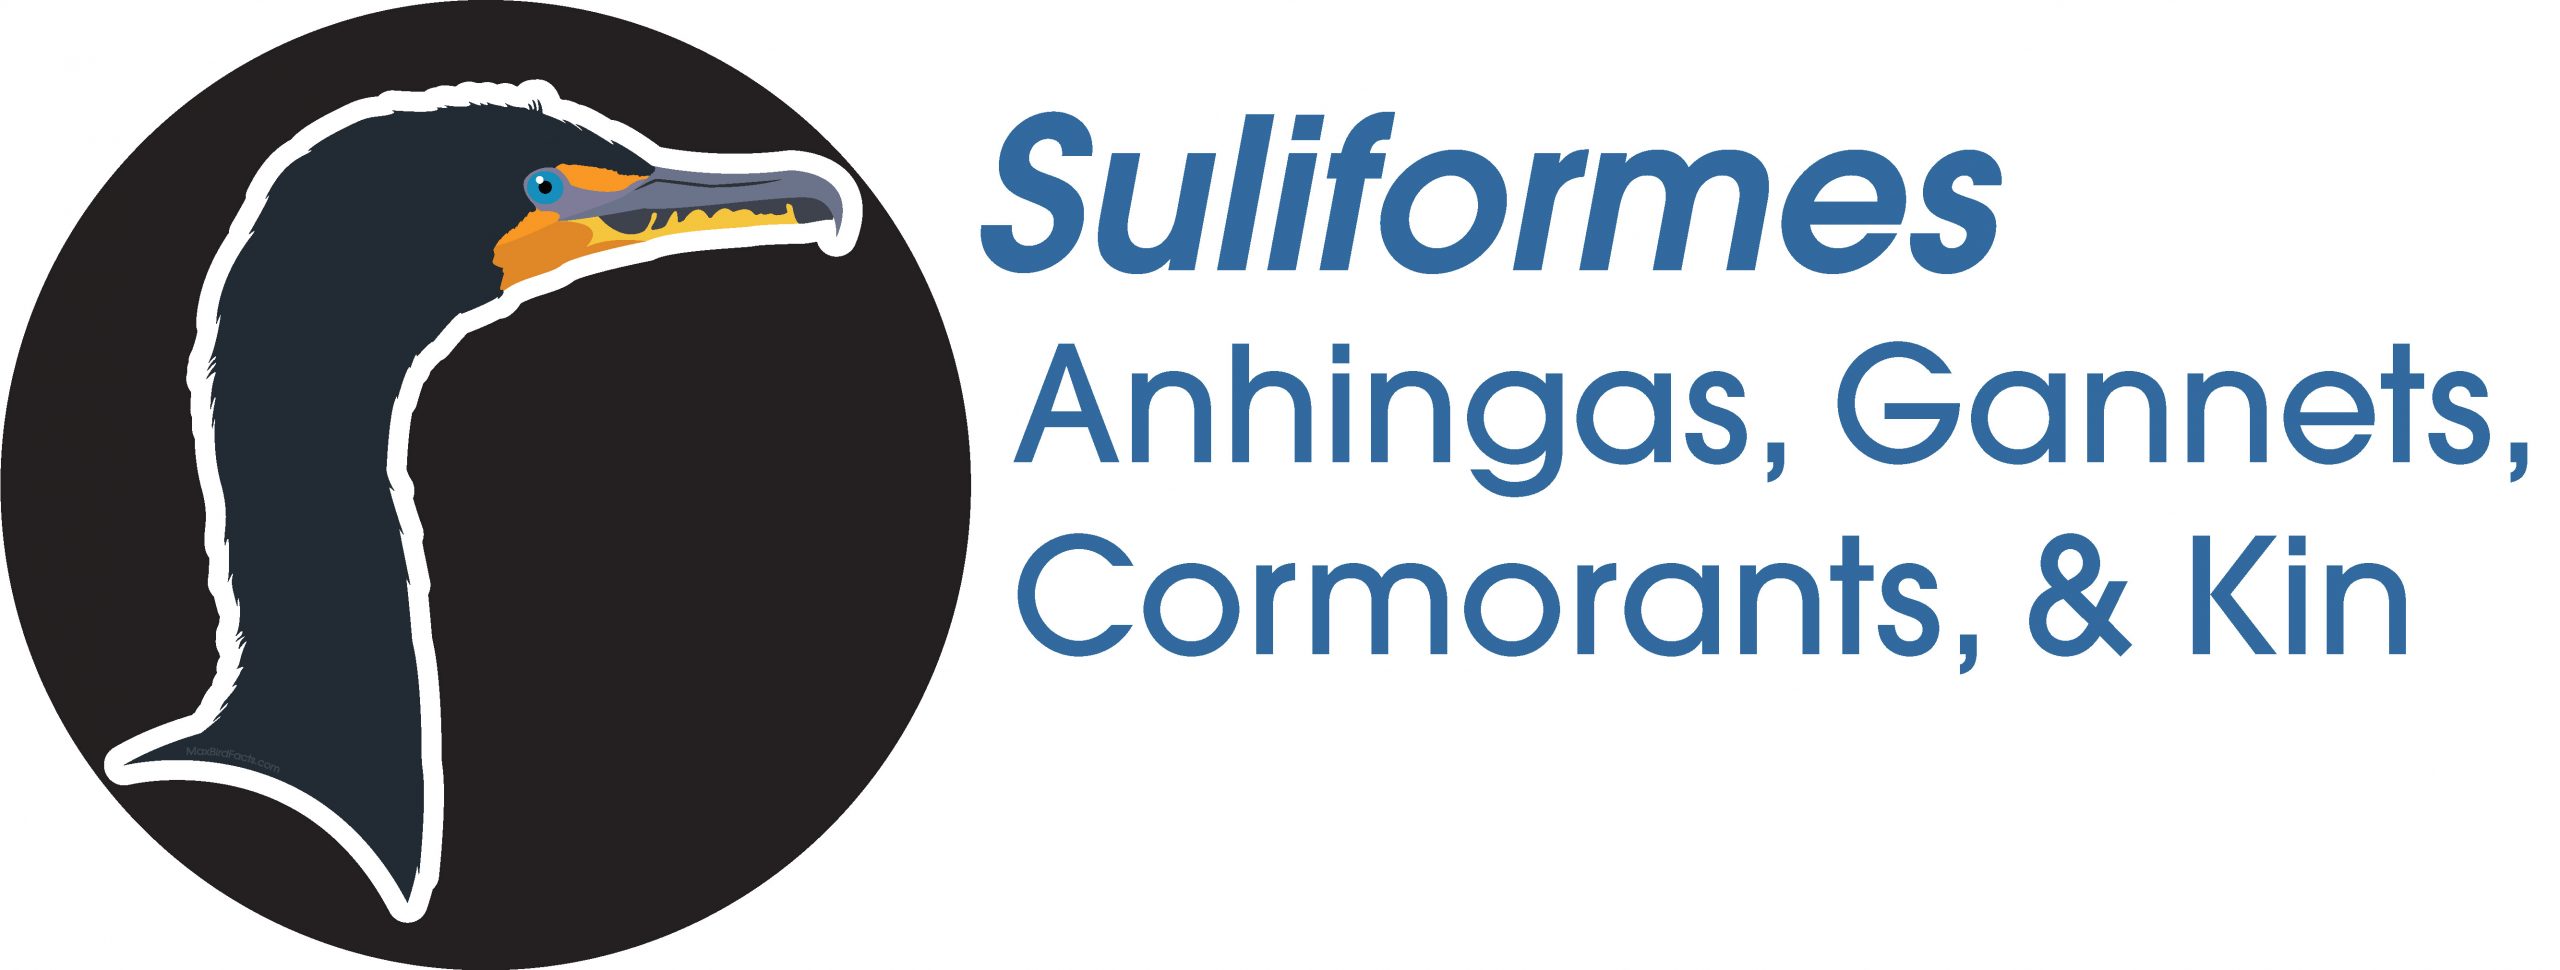 Suliformes
Anhinga, Gannets, Cormorants, and Kin
Double-crested Cormorant